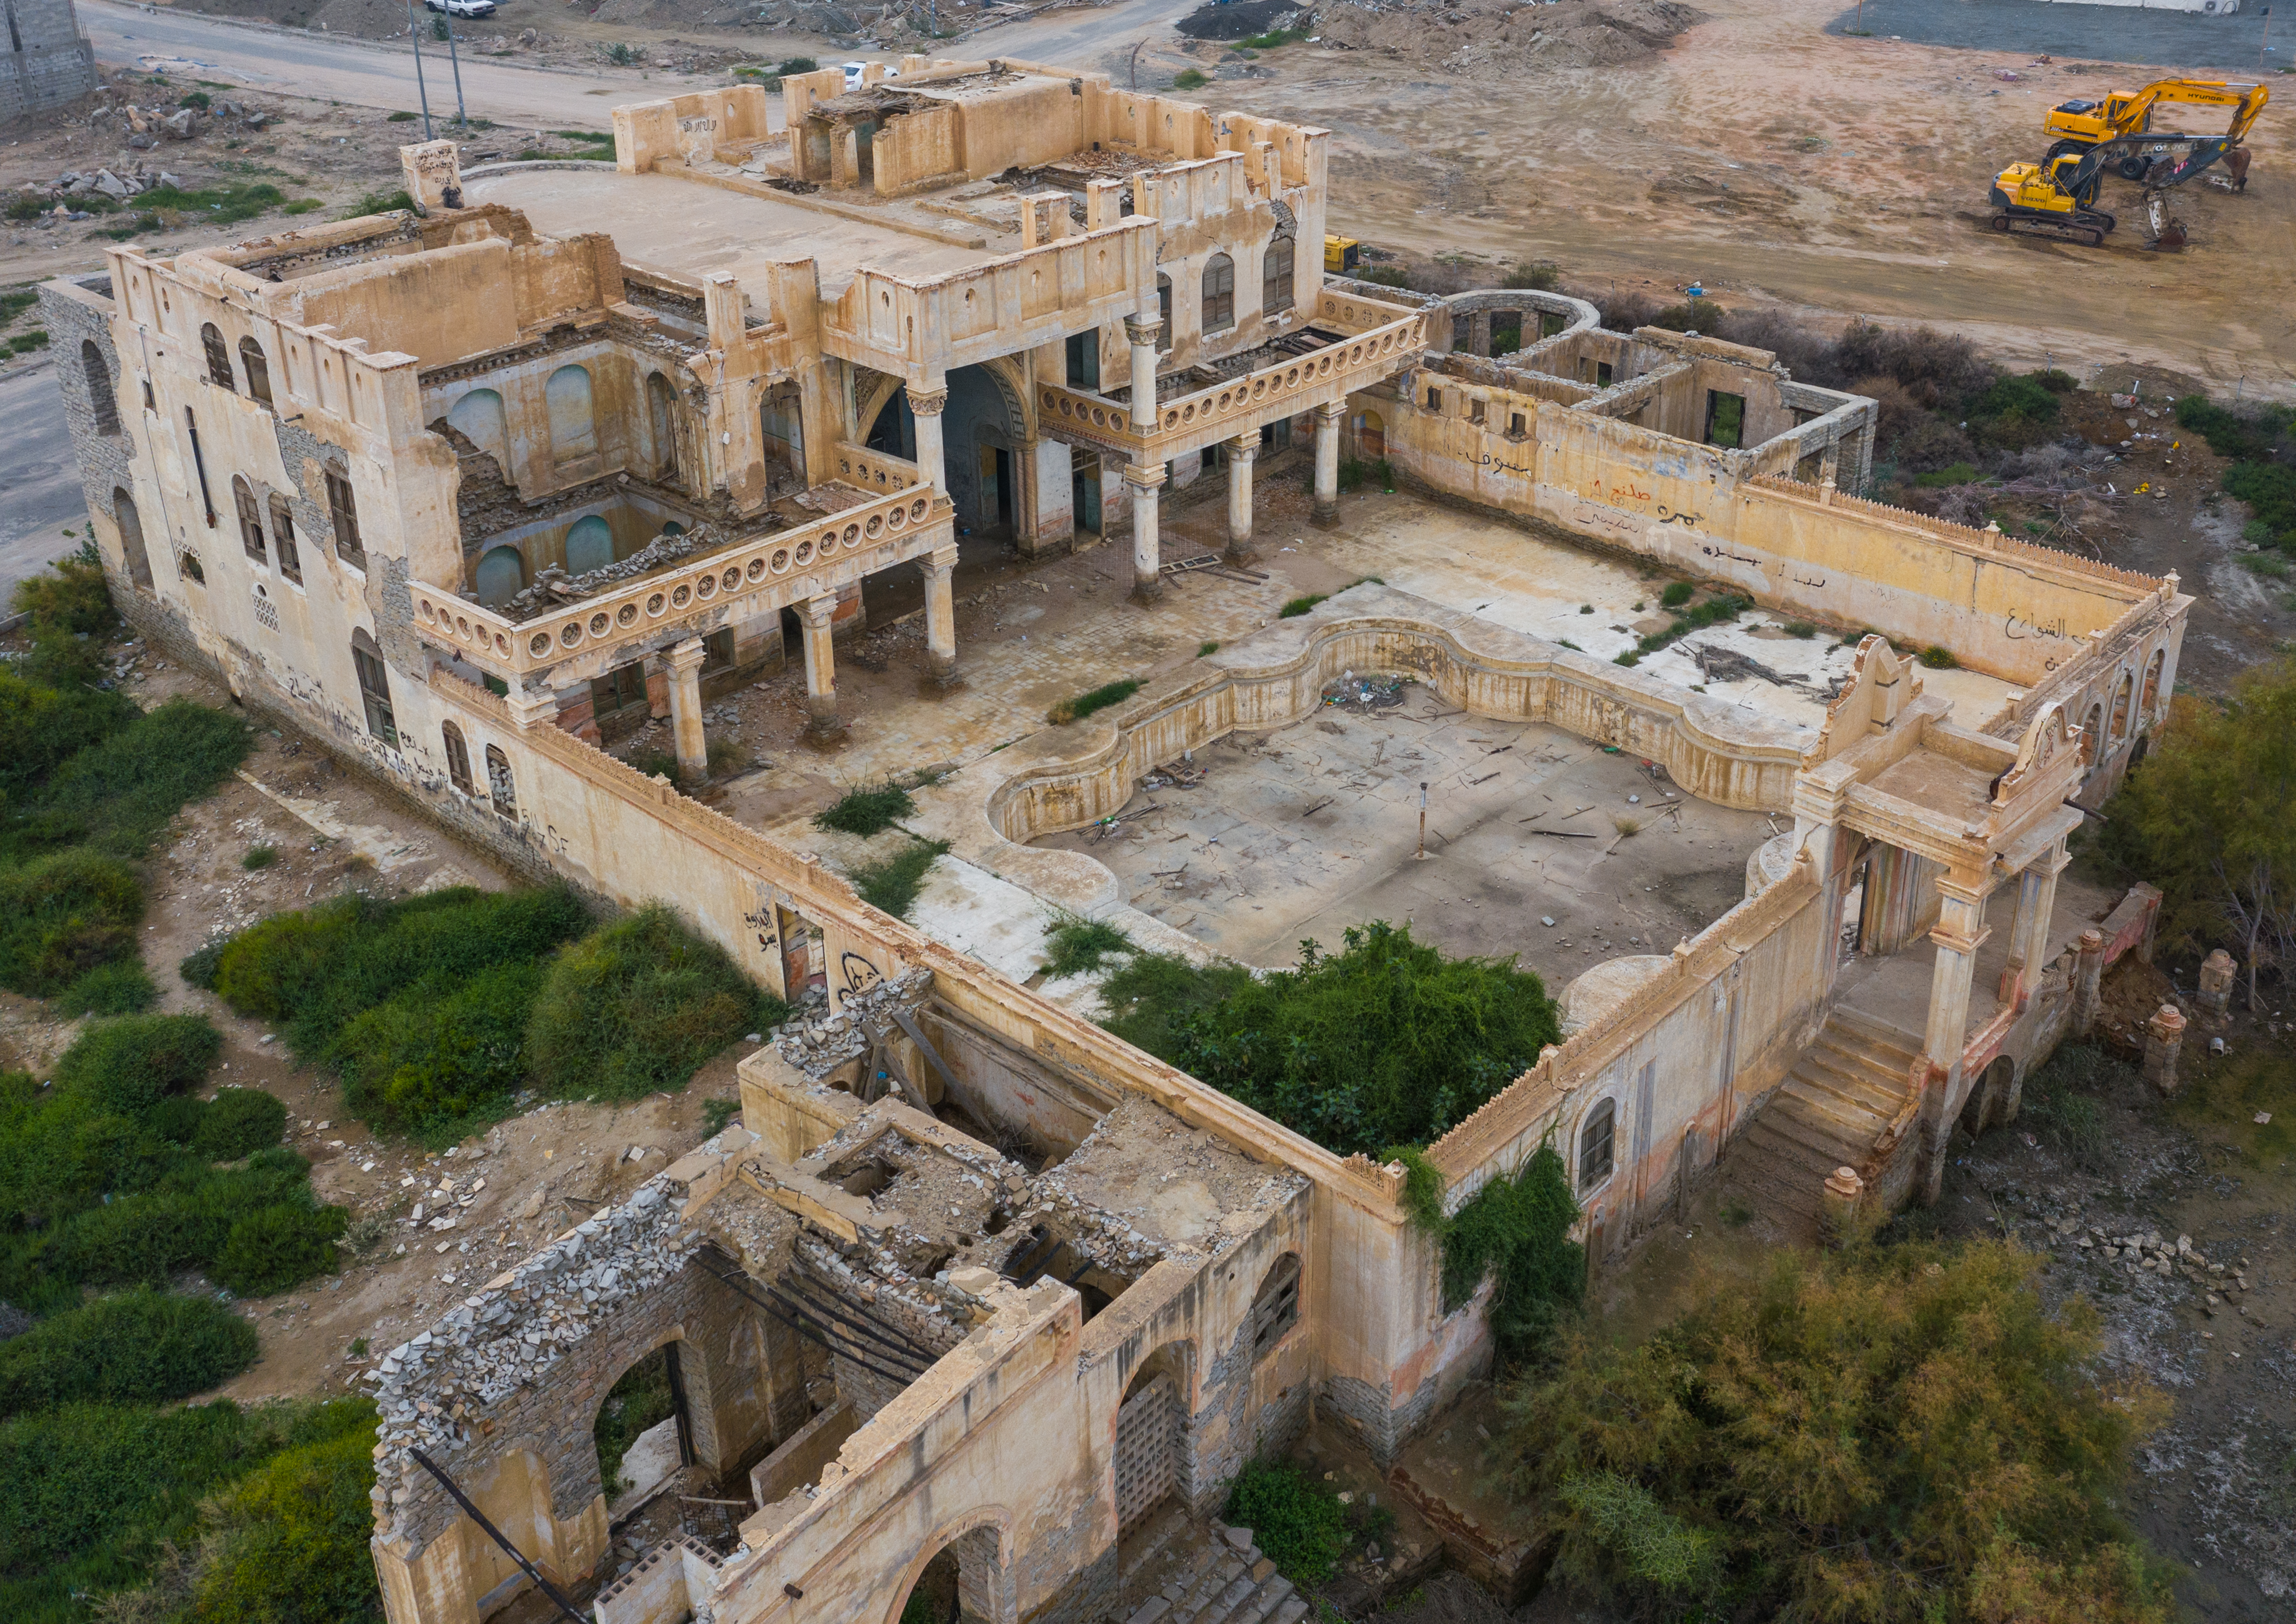 Abandoned Abdullah al-Suleiman palace in Taif, near Mecca, Saudi Arabia (photo: Eric Lafforgue)